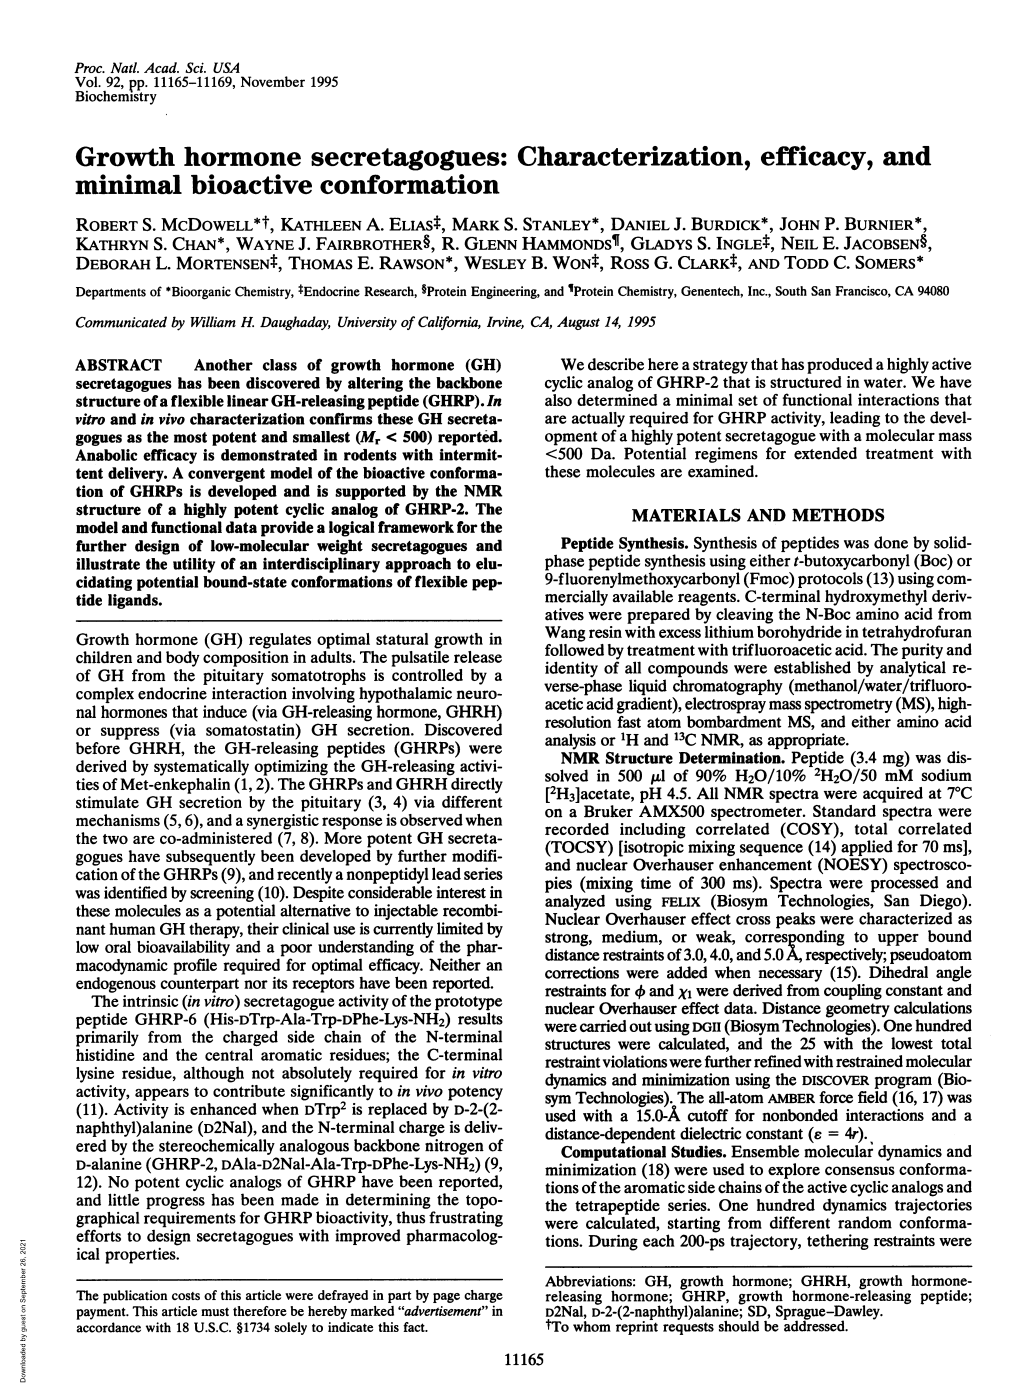 Growth Hormone Secretagogues: Characterization, Efficacy, and Minimal Bioactive Conformation ROBERT S